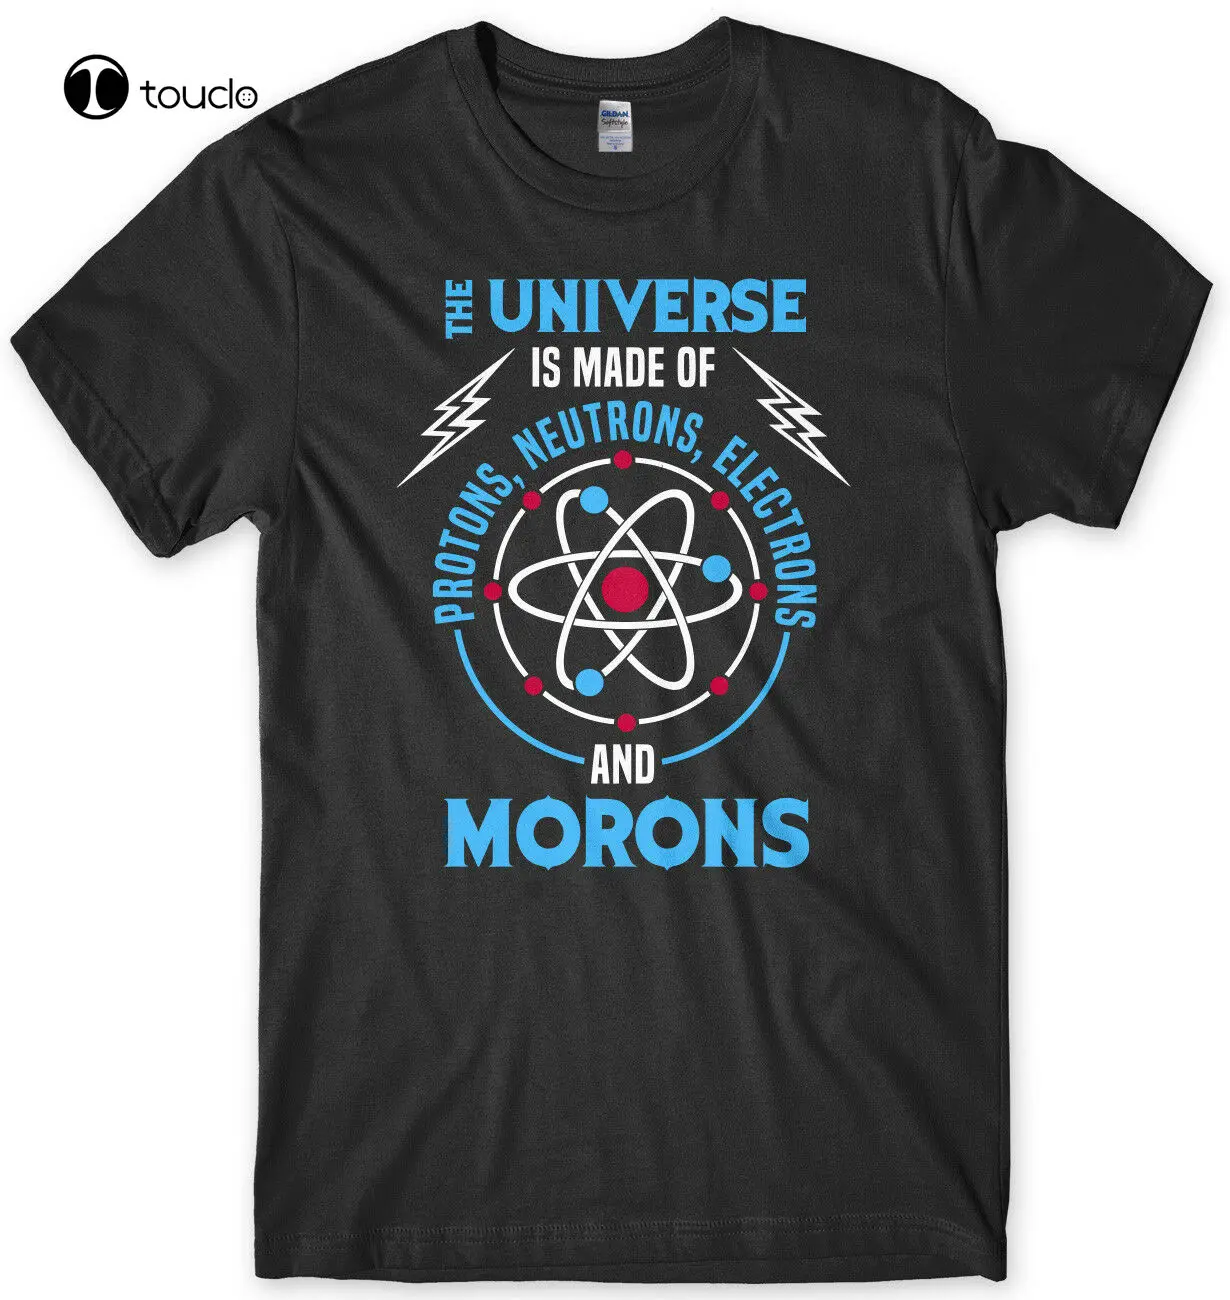 The Universe сделана из протонов и моонов смешная Мужская футболка унисекс на заказ